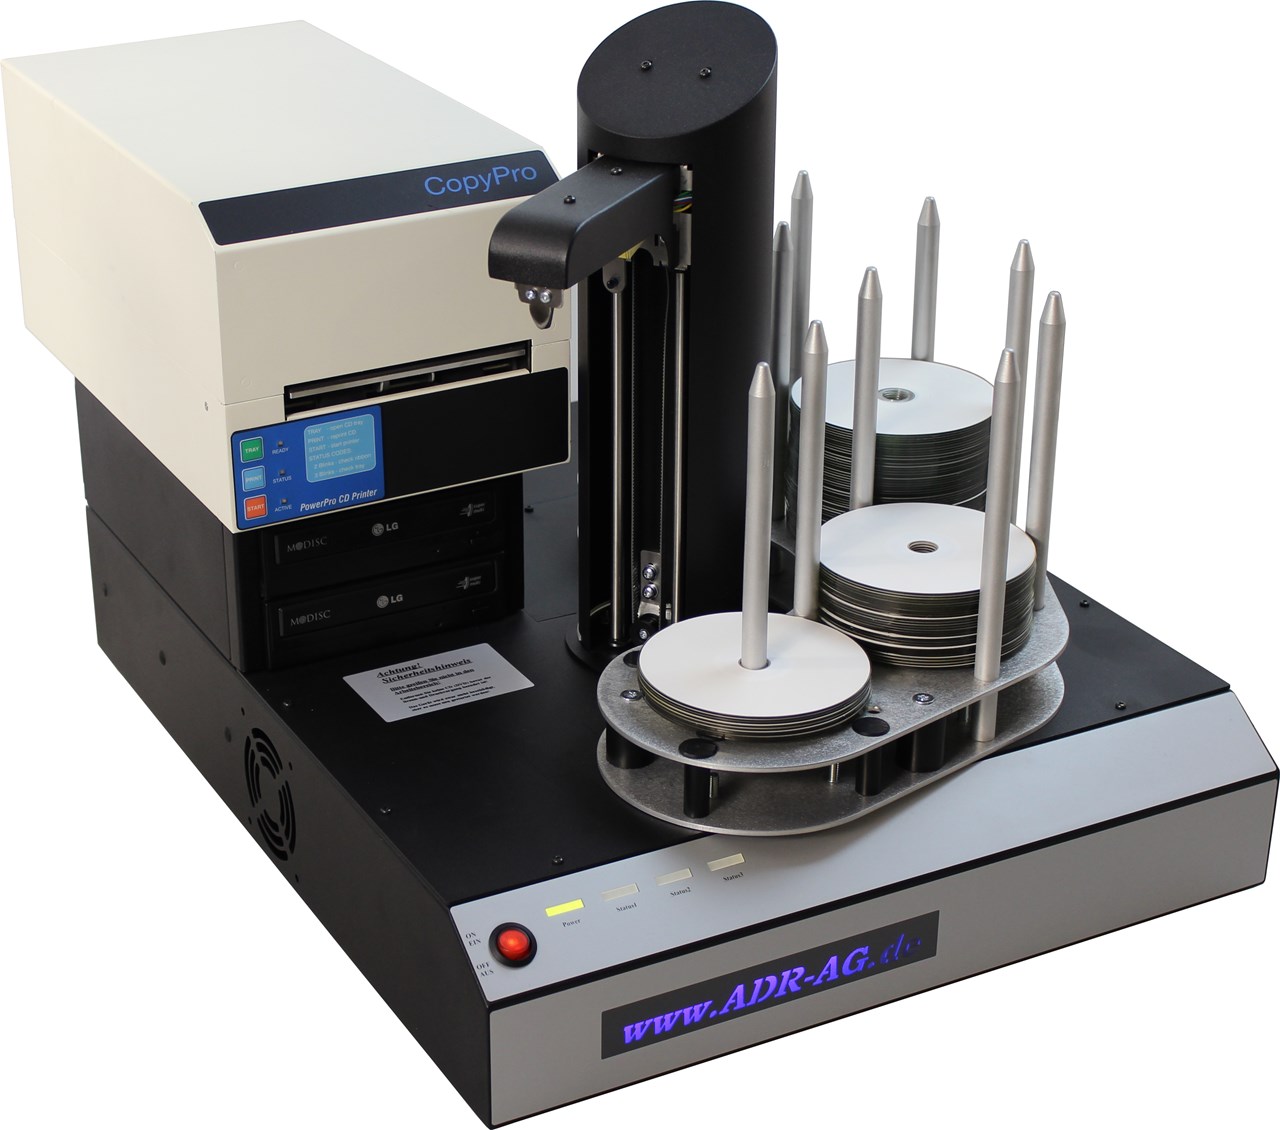 Image de Robot de duplication CD/DVD Hurricane 2 avec imprimante transfert thermique PowerPro III